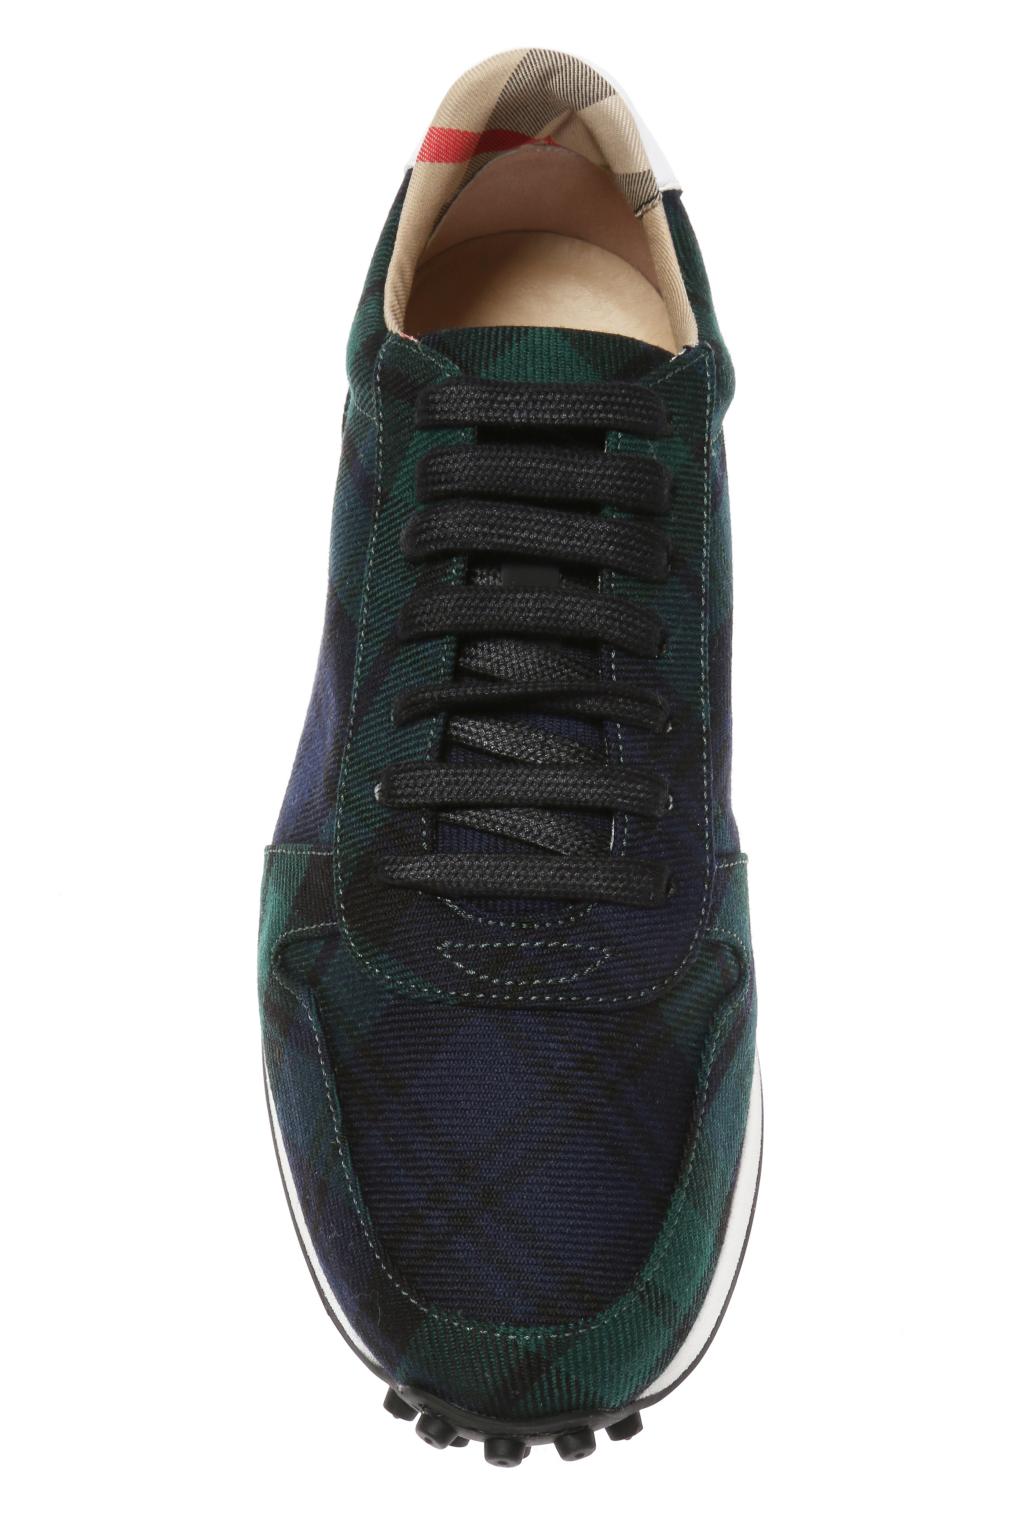 Burberry 'Tartan' sneakers | Men's Shoes | Vitkac